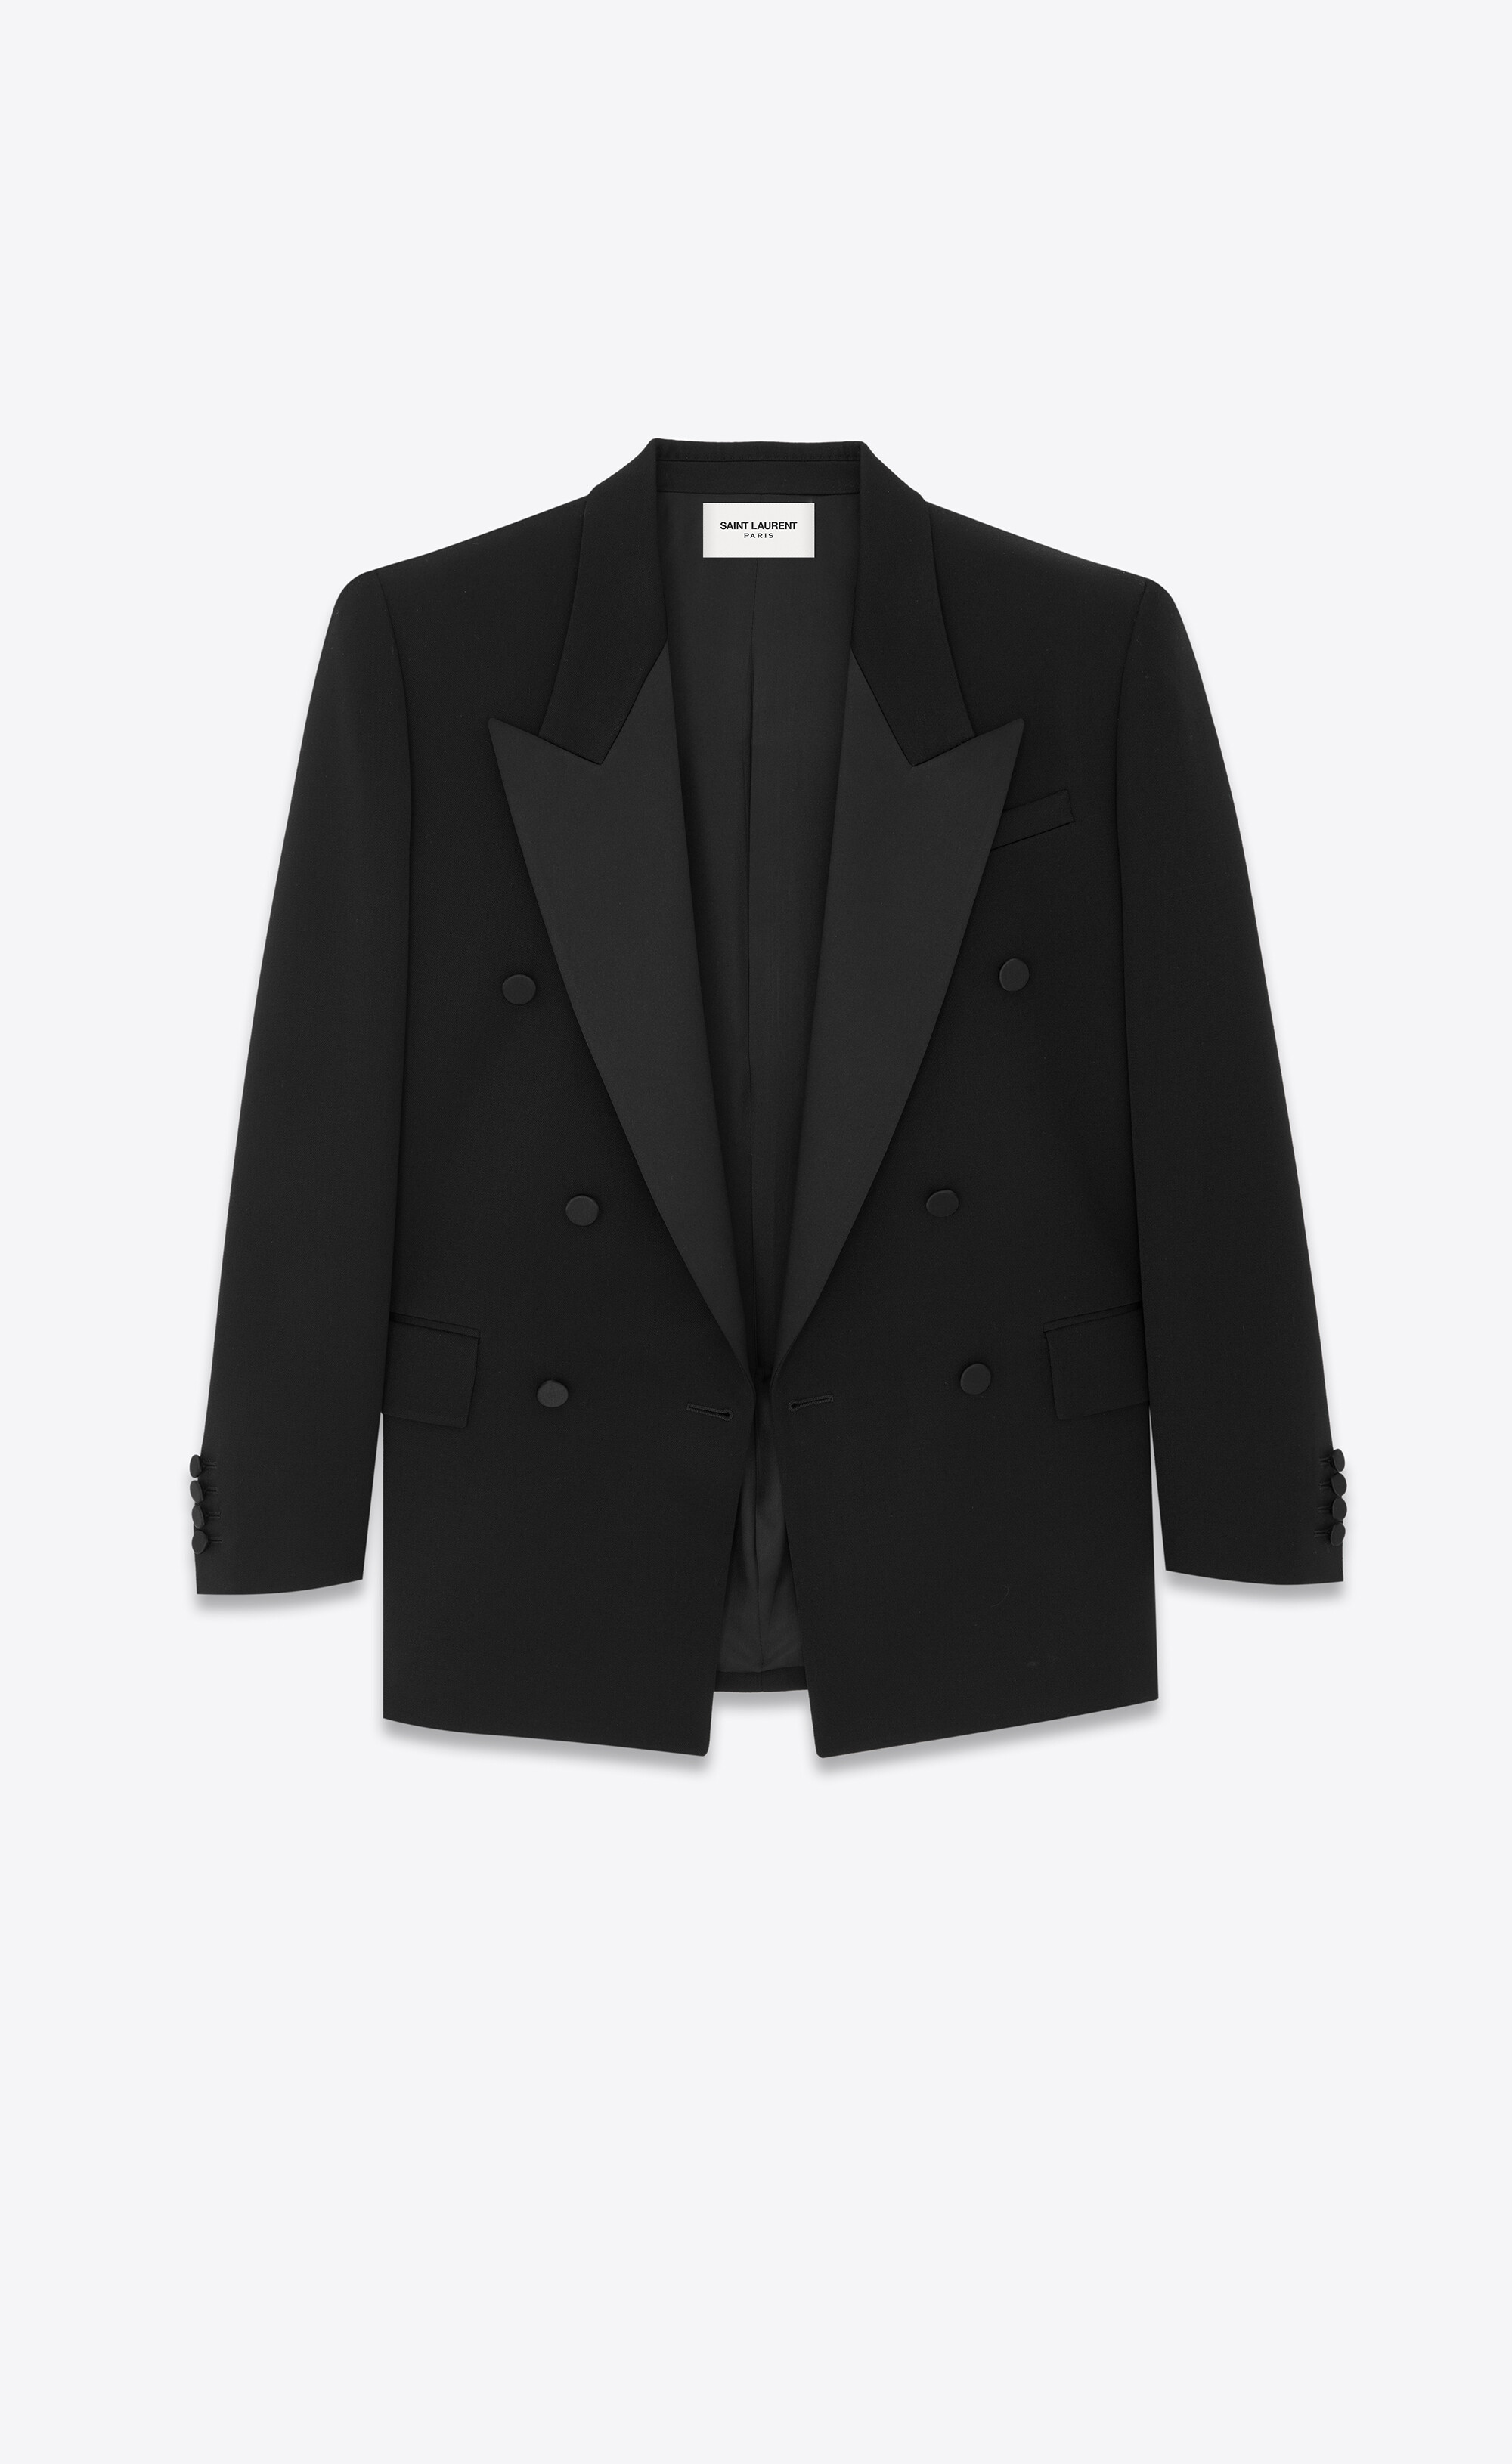 Double-breasted Grain de Poudre tuxedo jacket